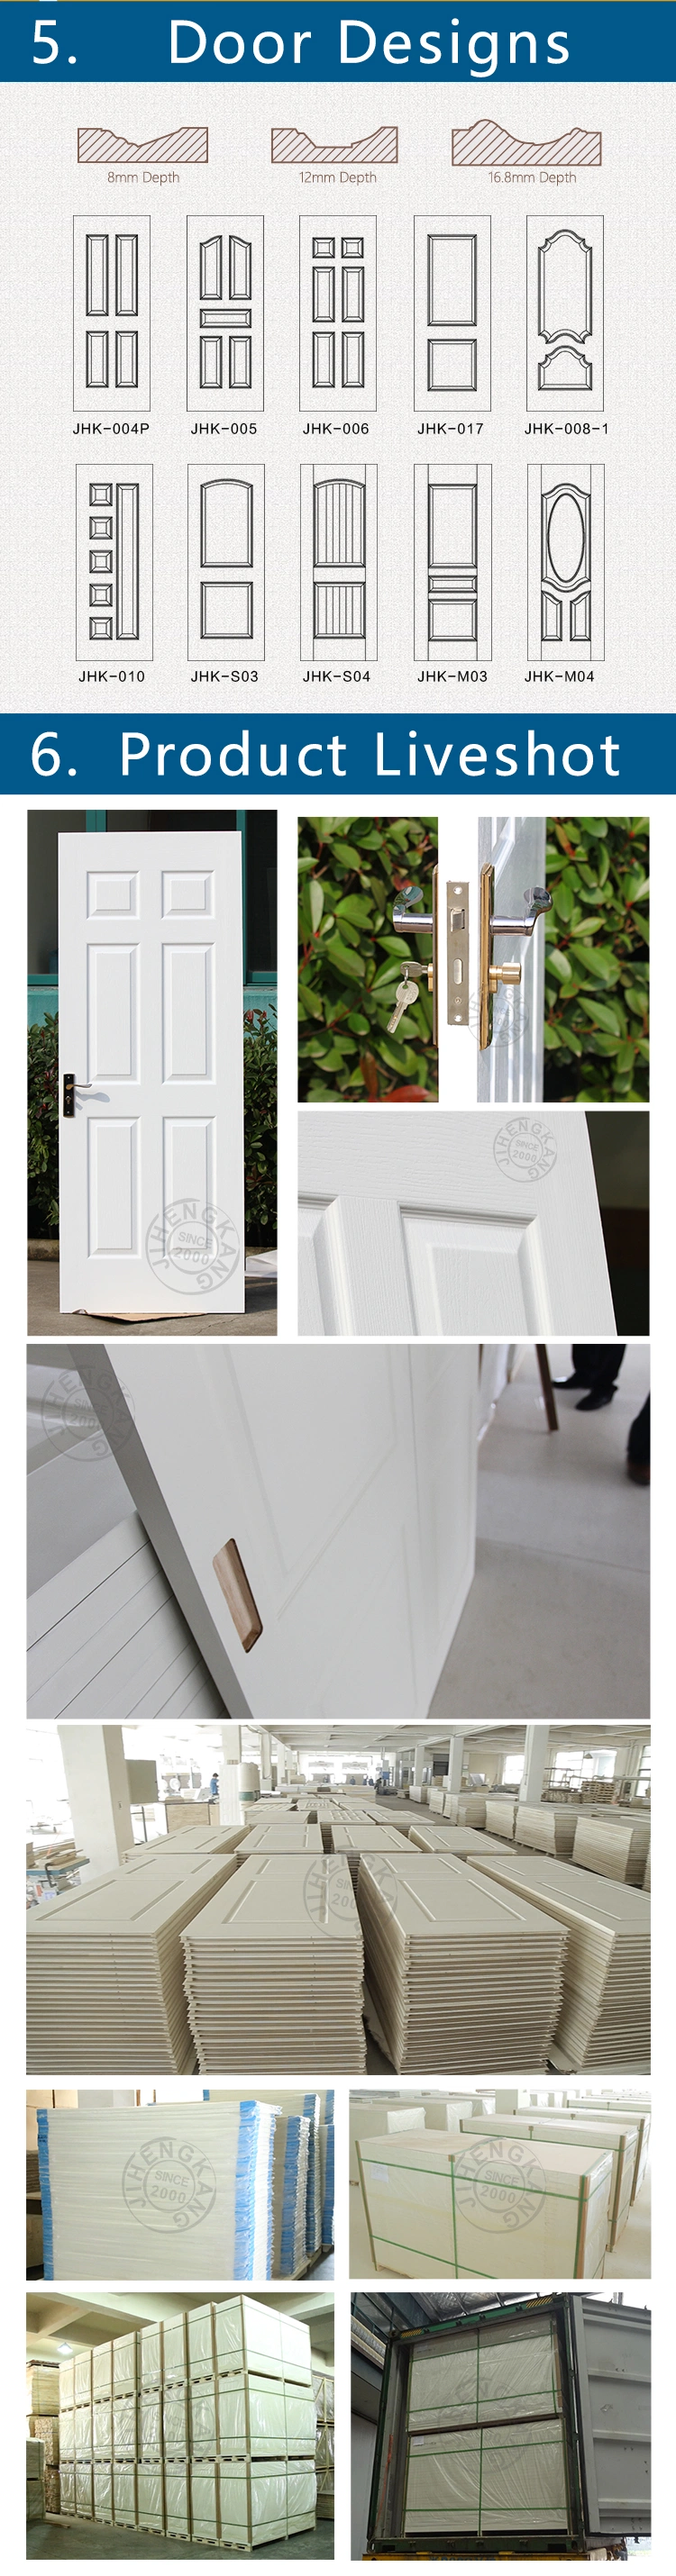 JHK-017 White Primer Interior Hollow Core Wooden Solid Wood Door